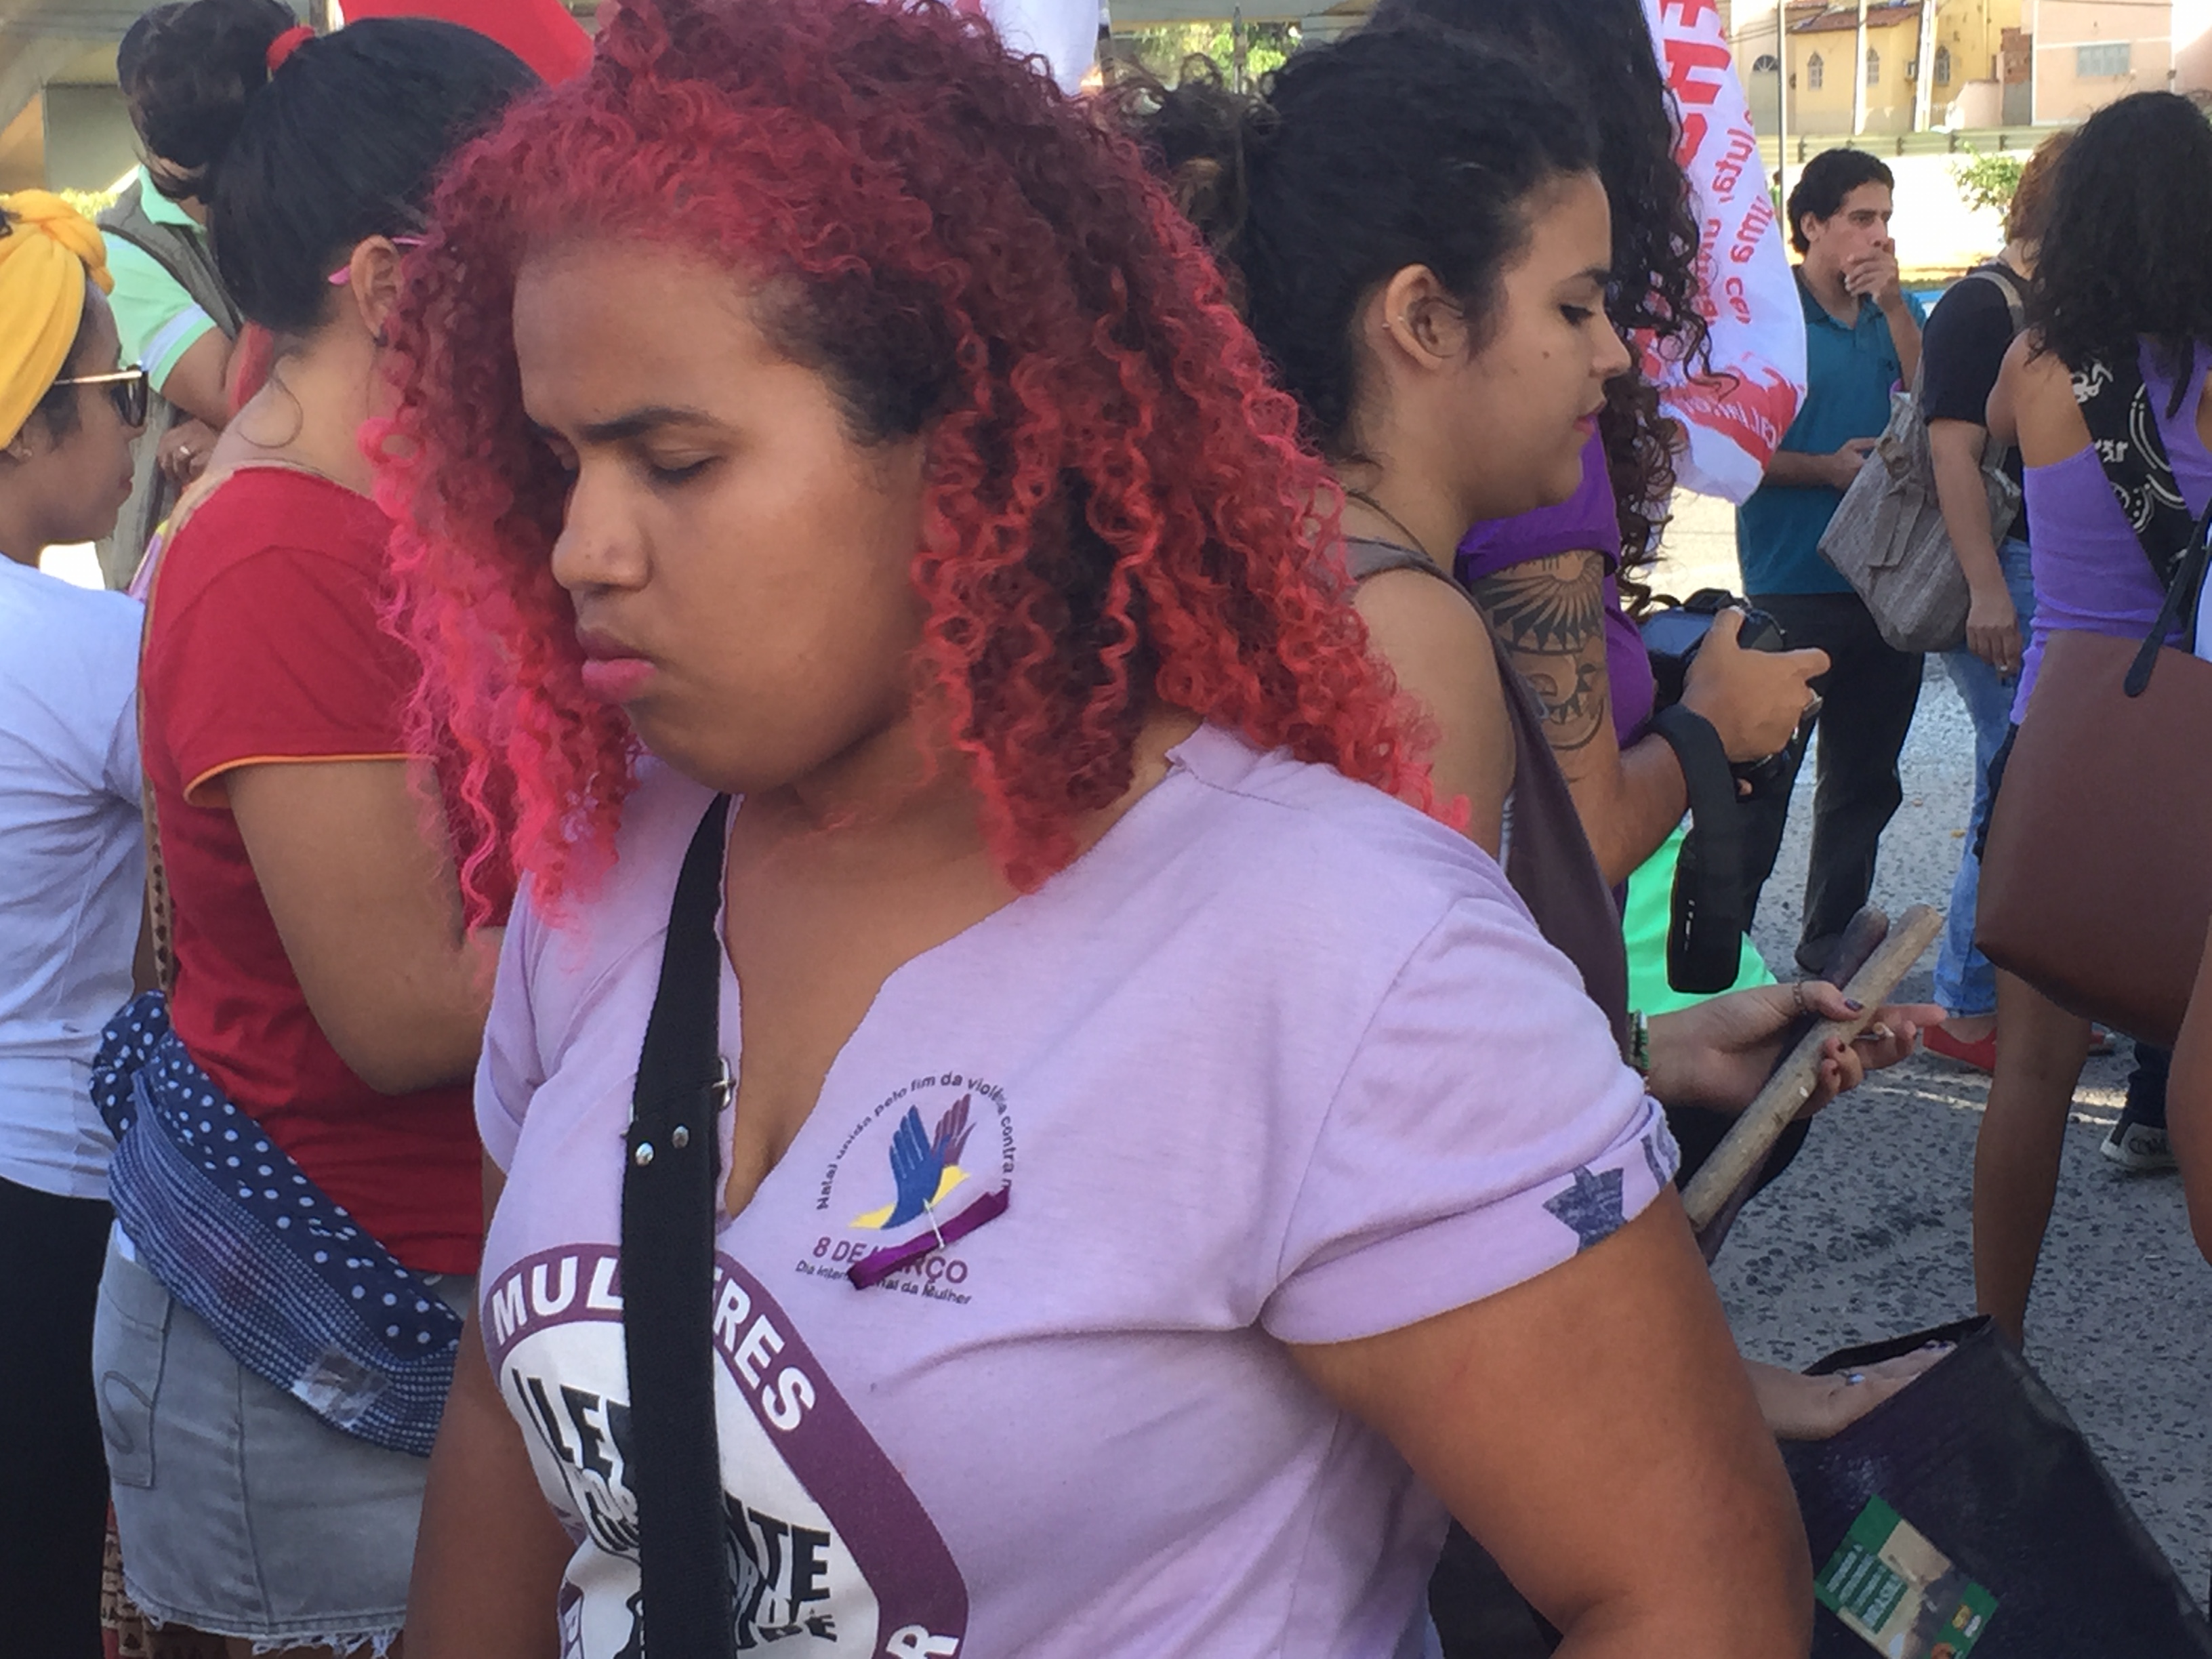 Protesto contra o estupro reúne mulheres na Av. Rio Branco